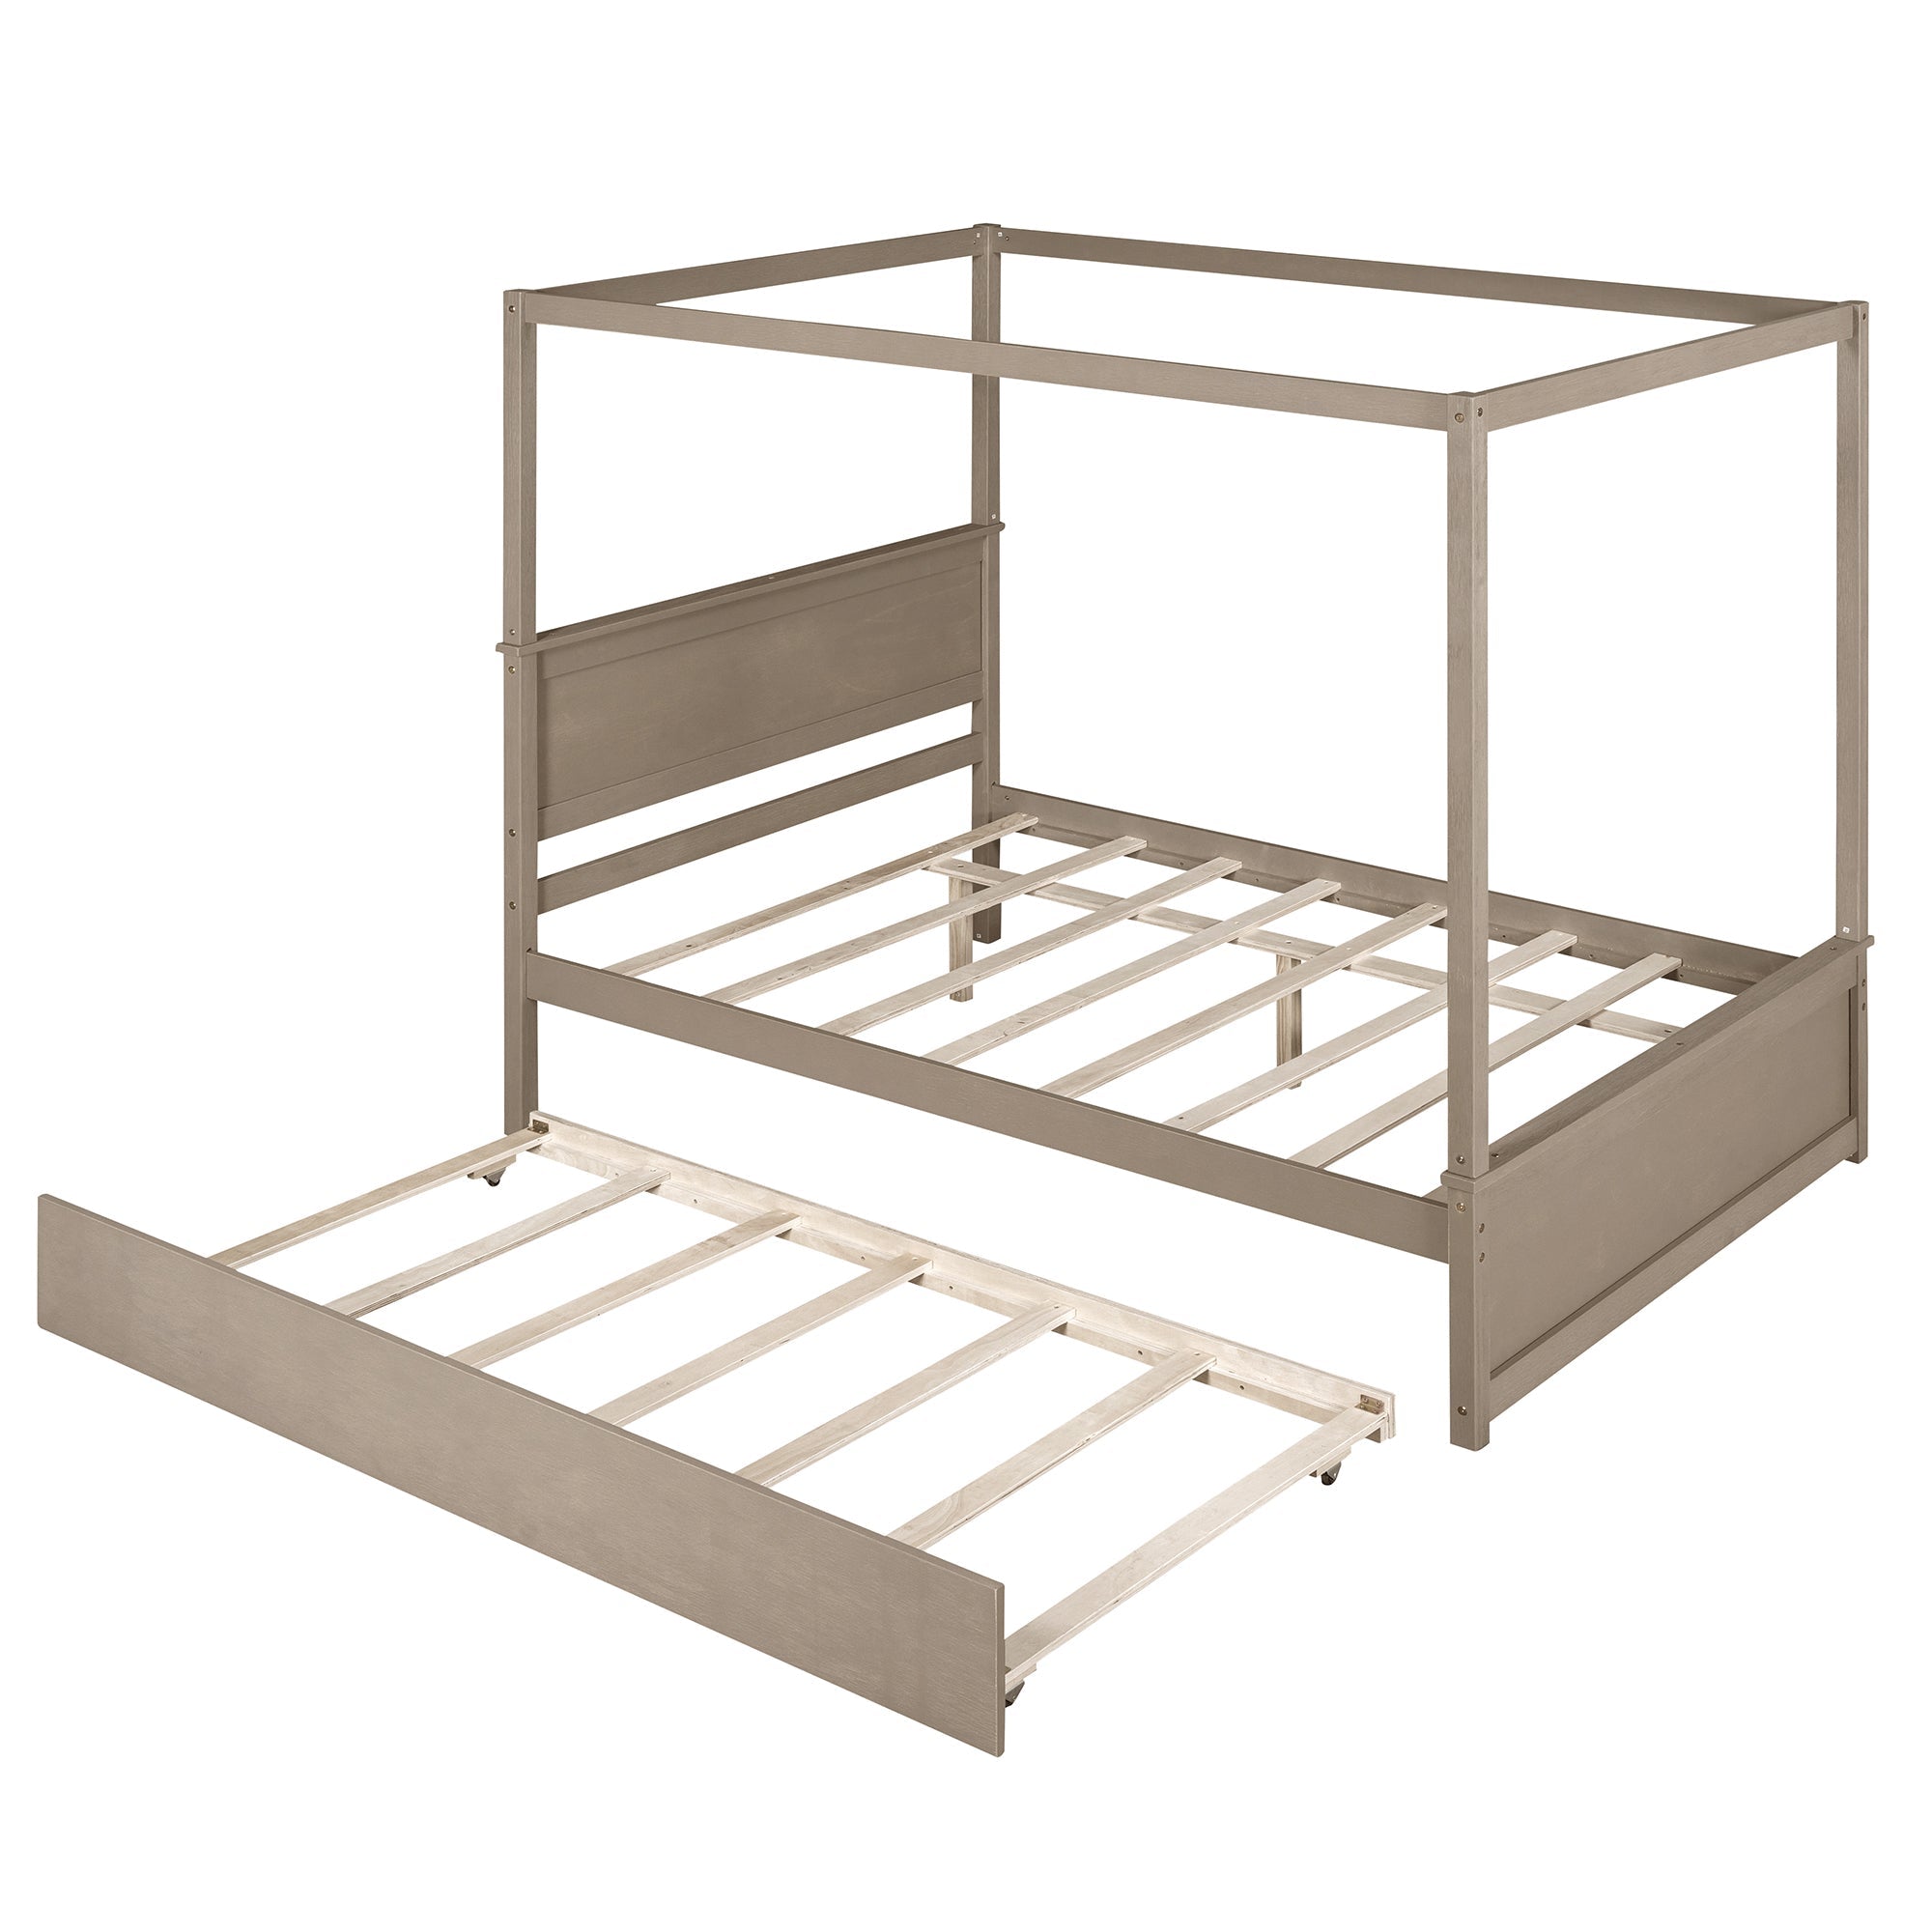 Bellemave Full Size Canopy Platform bed with Trundle - Bellemave